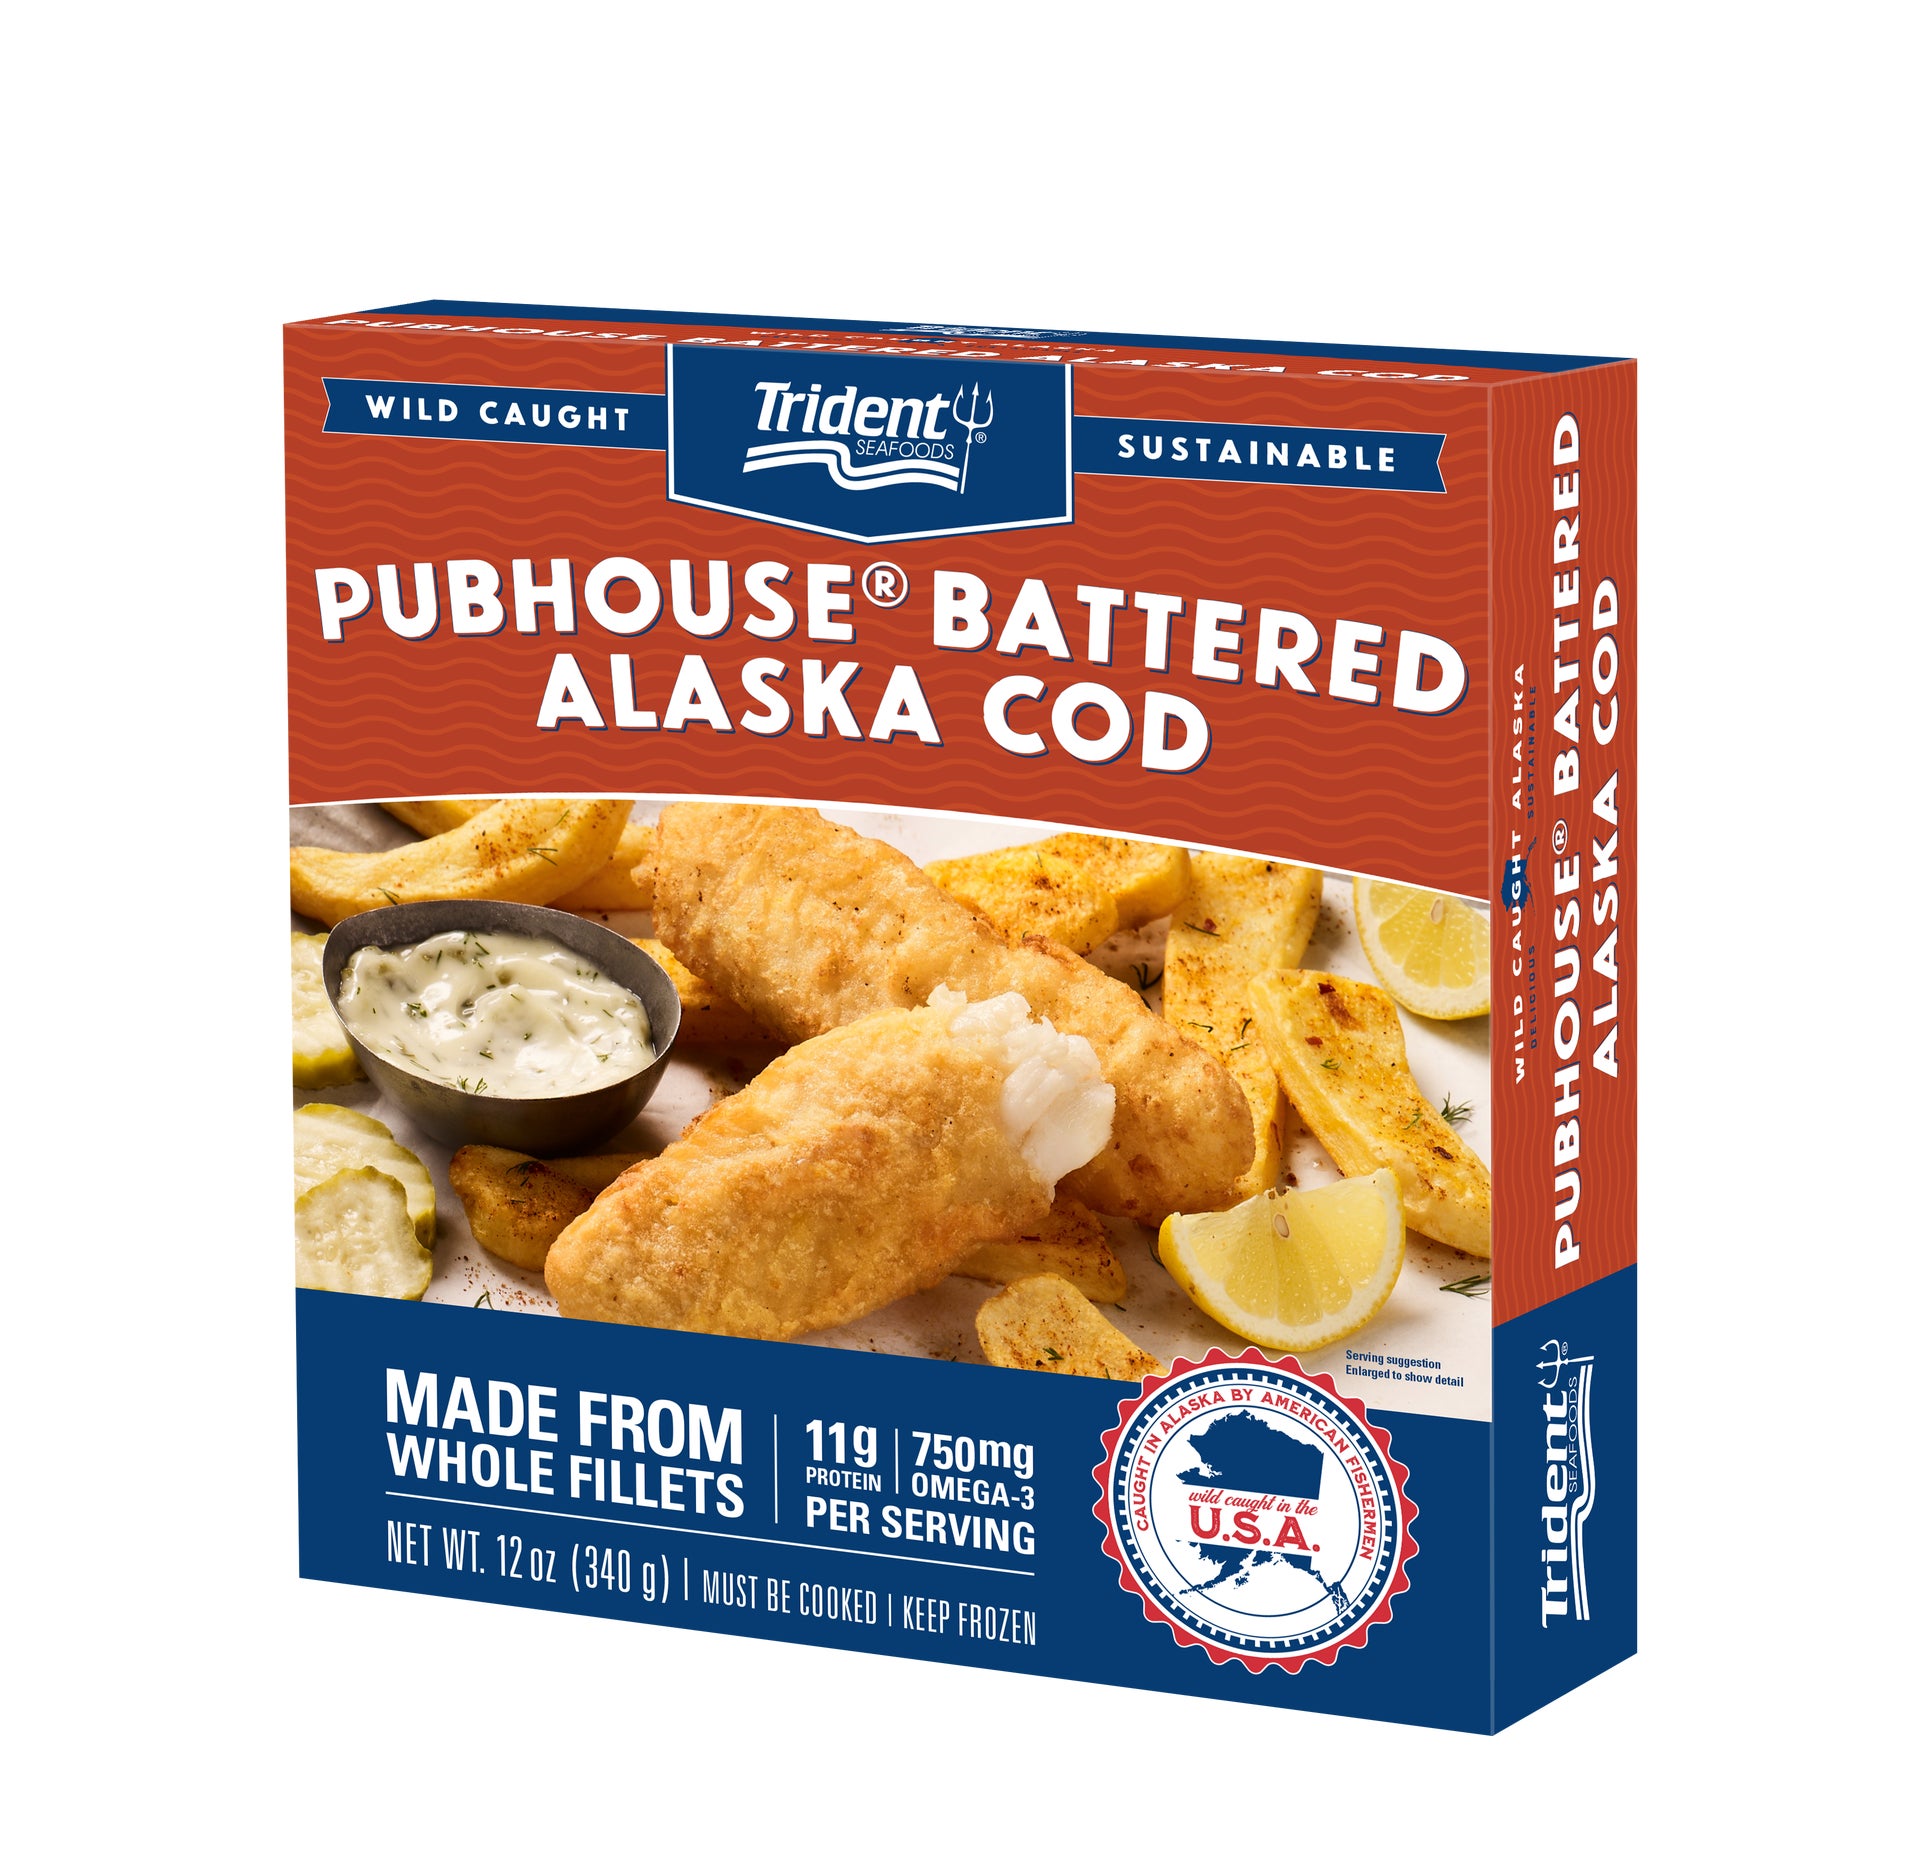 PubHouse® Battered Alaska Cod Packaging